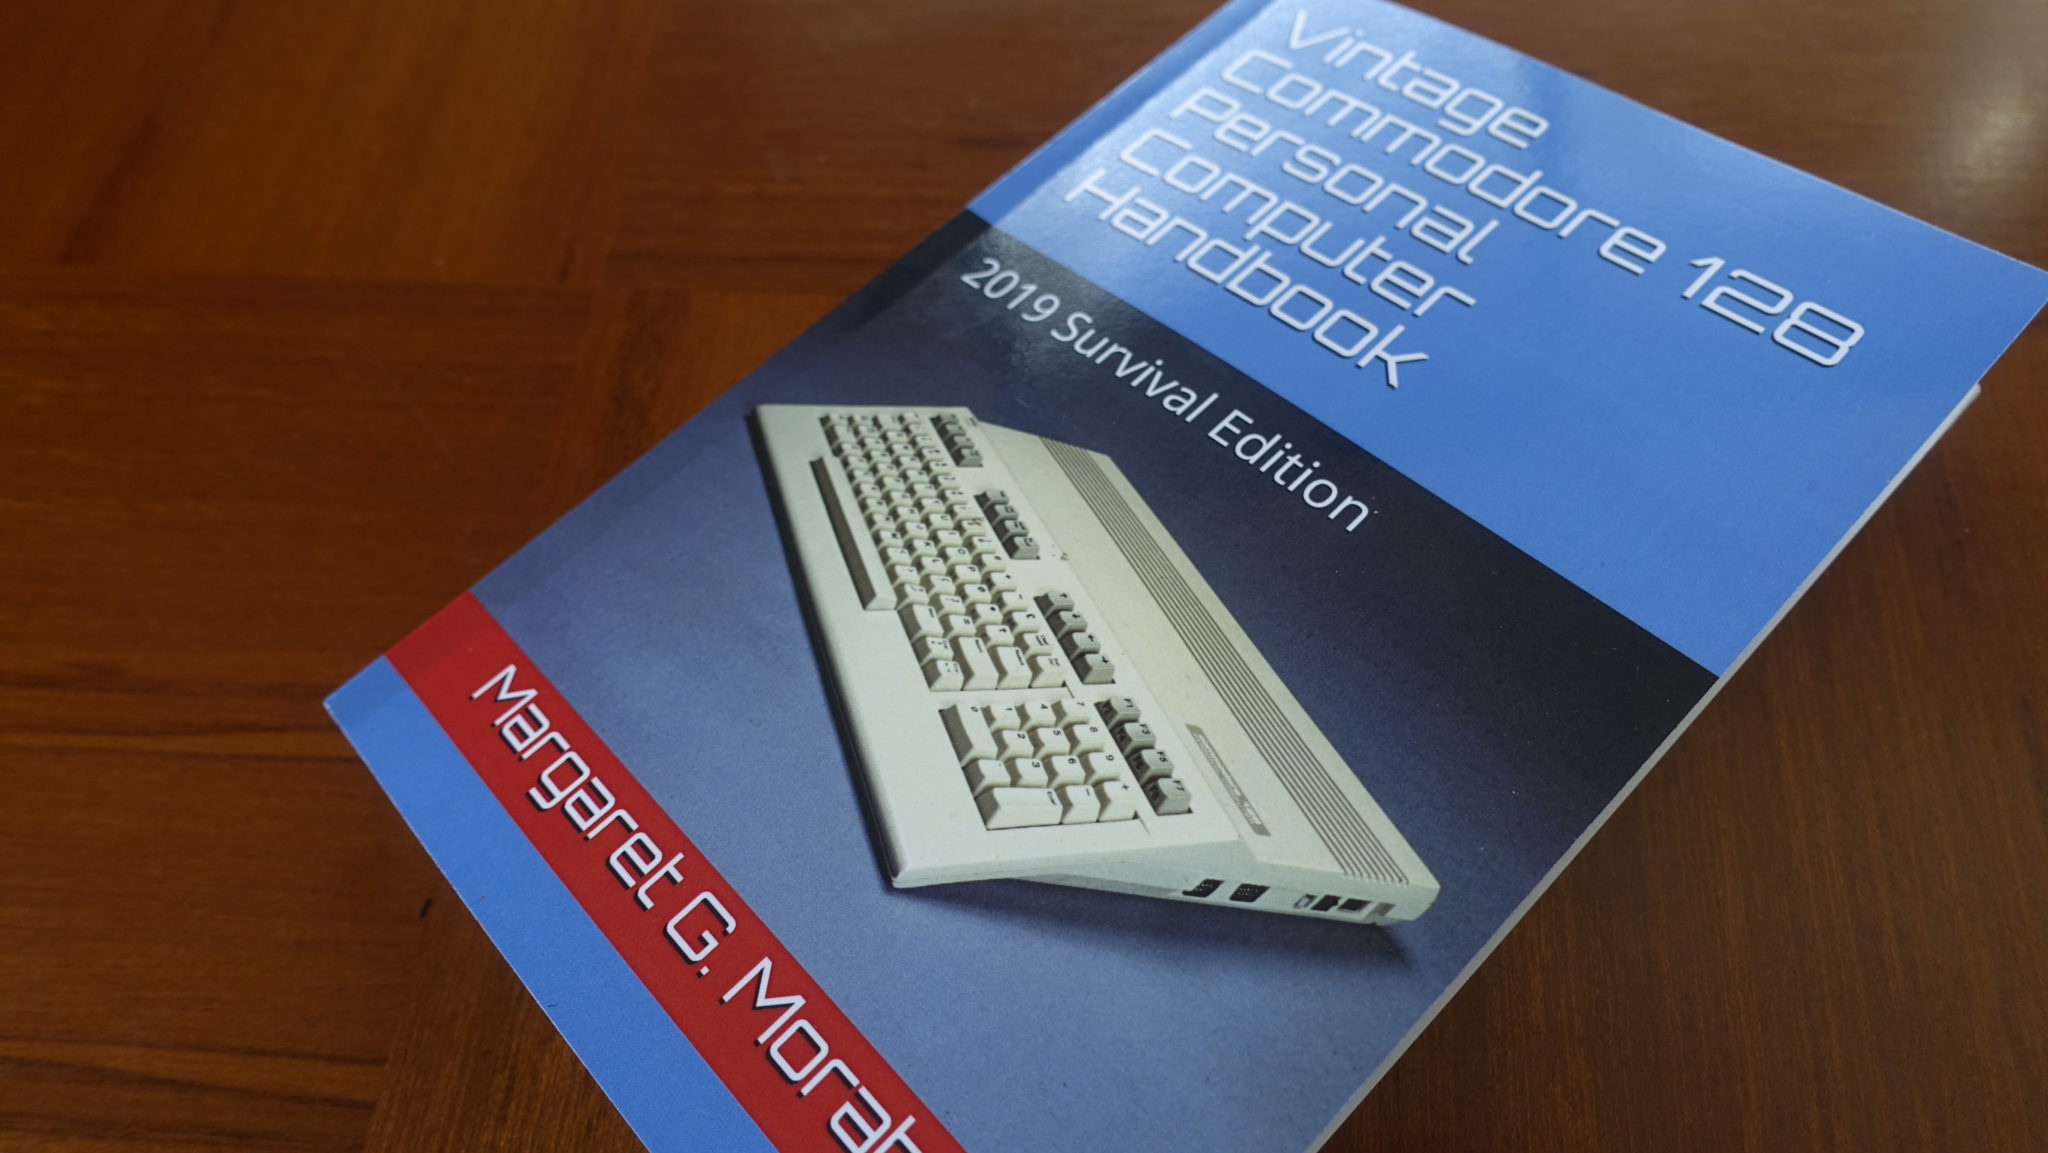 Vintage Commodore 128 Personal Computer Handbook Review